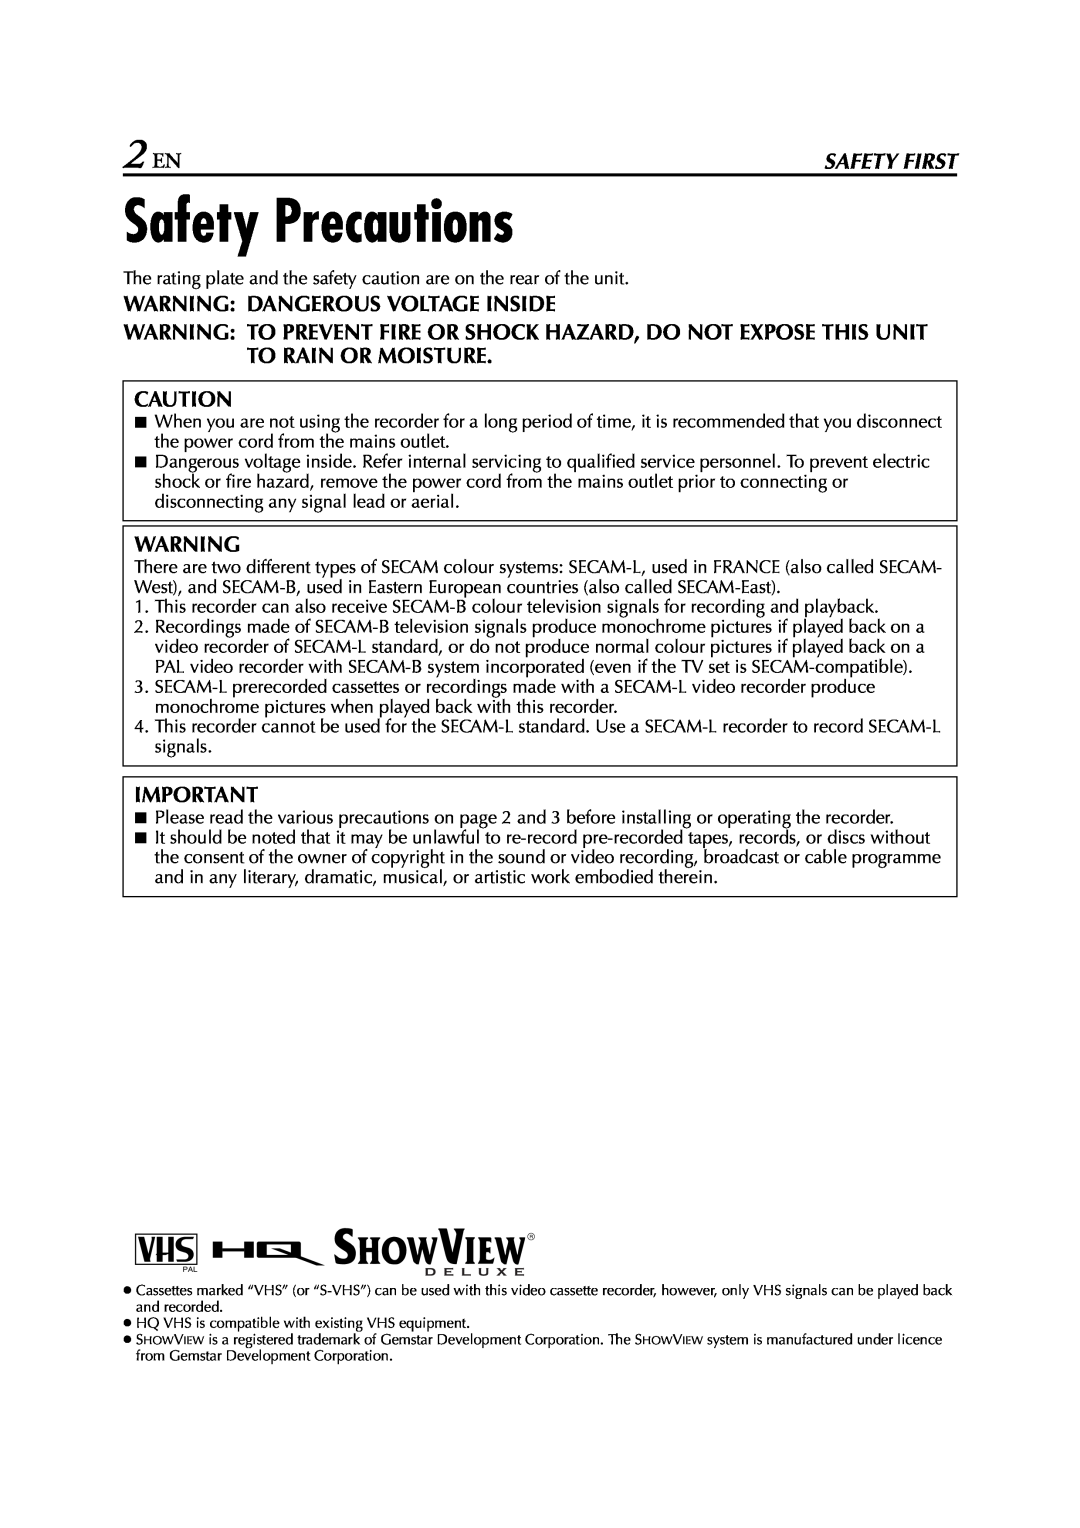 JVC HR-J674EU instruction manual Safety Precautions, 2 EN, Warning Dangerous Voltage Inside, Safety First 